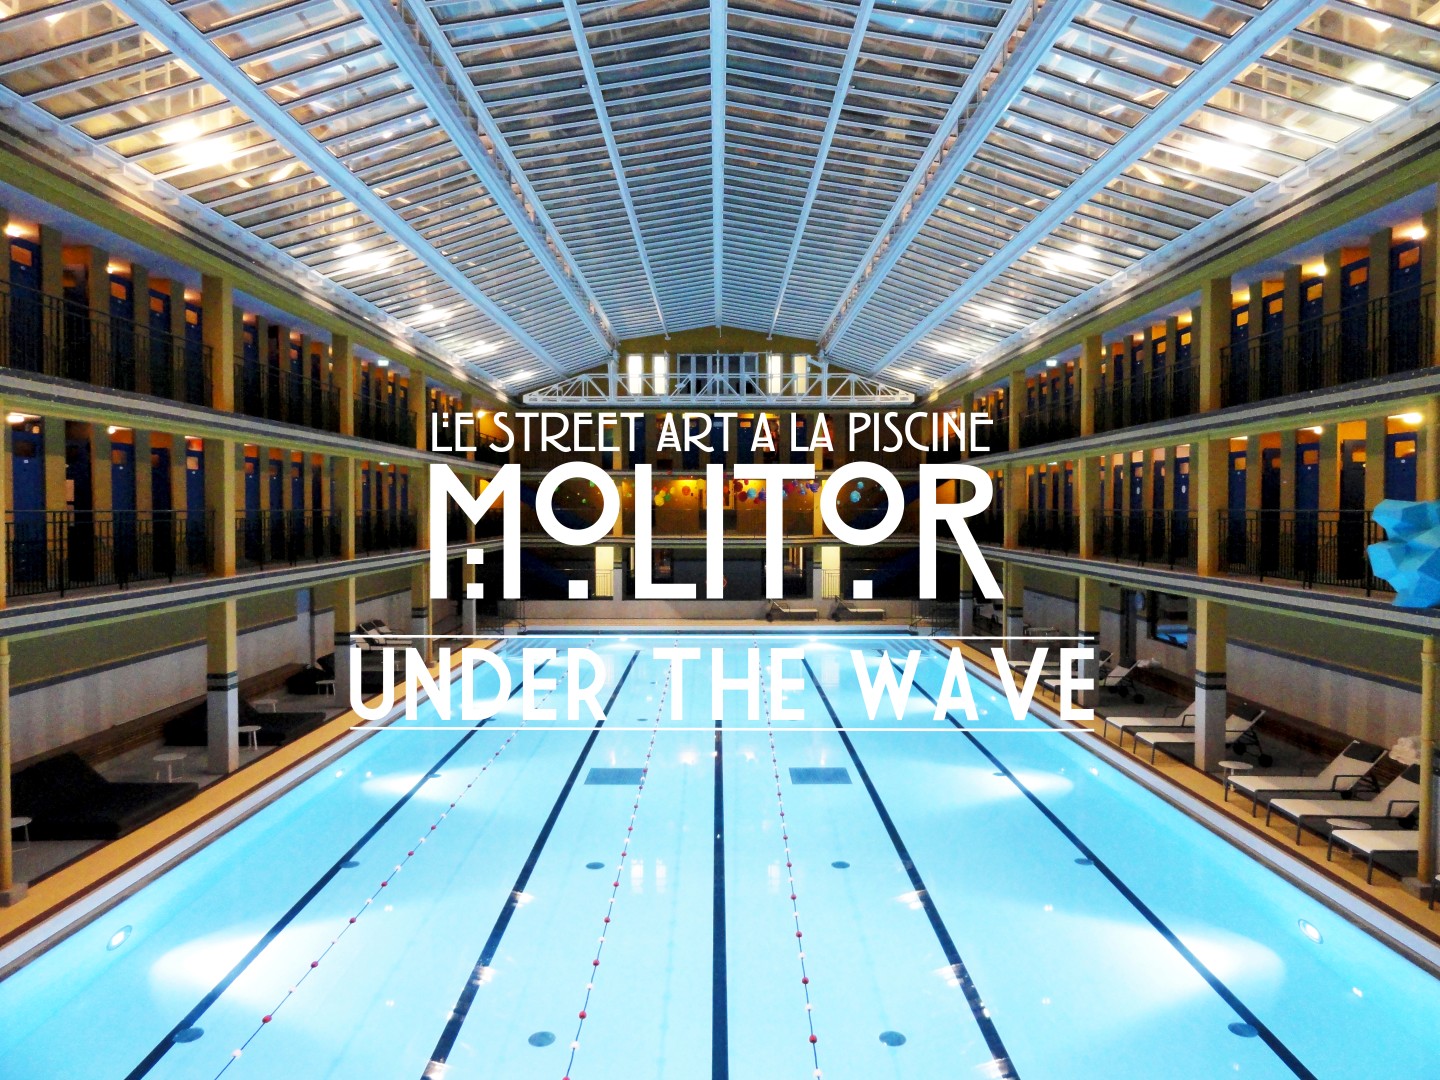 20141029_Under_the_wave_molitor (Large)